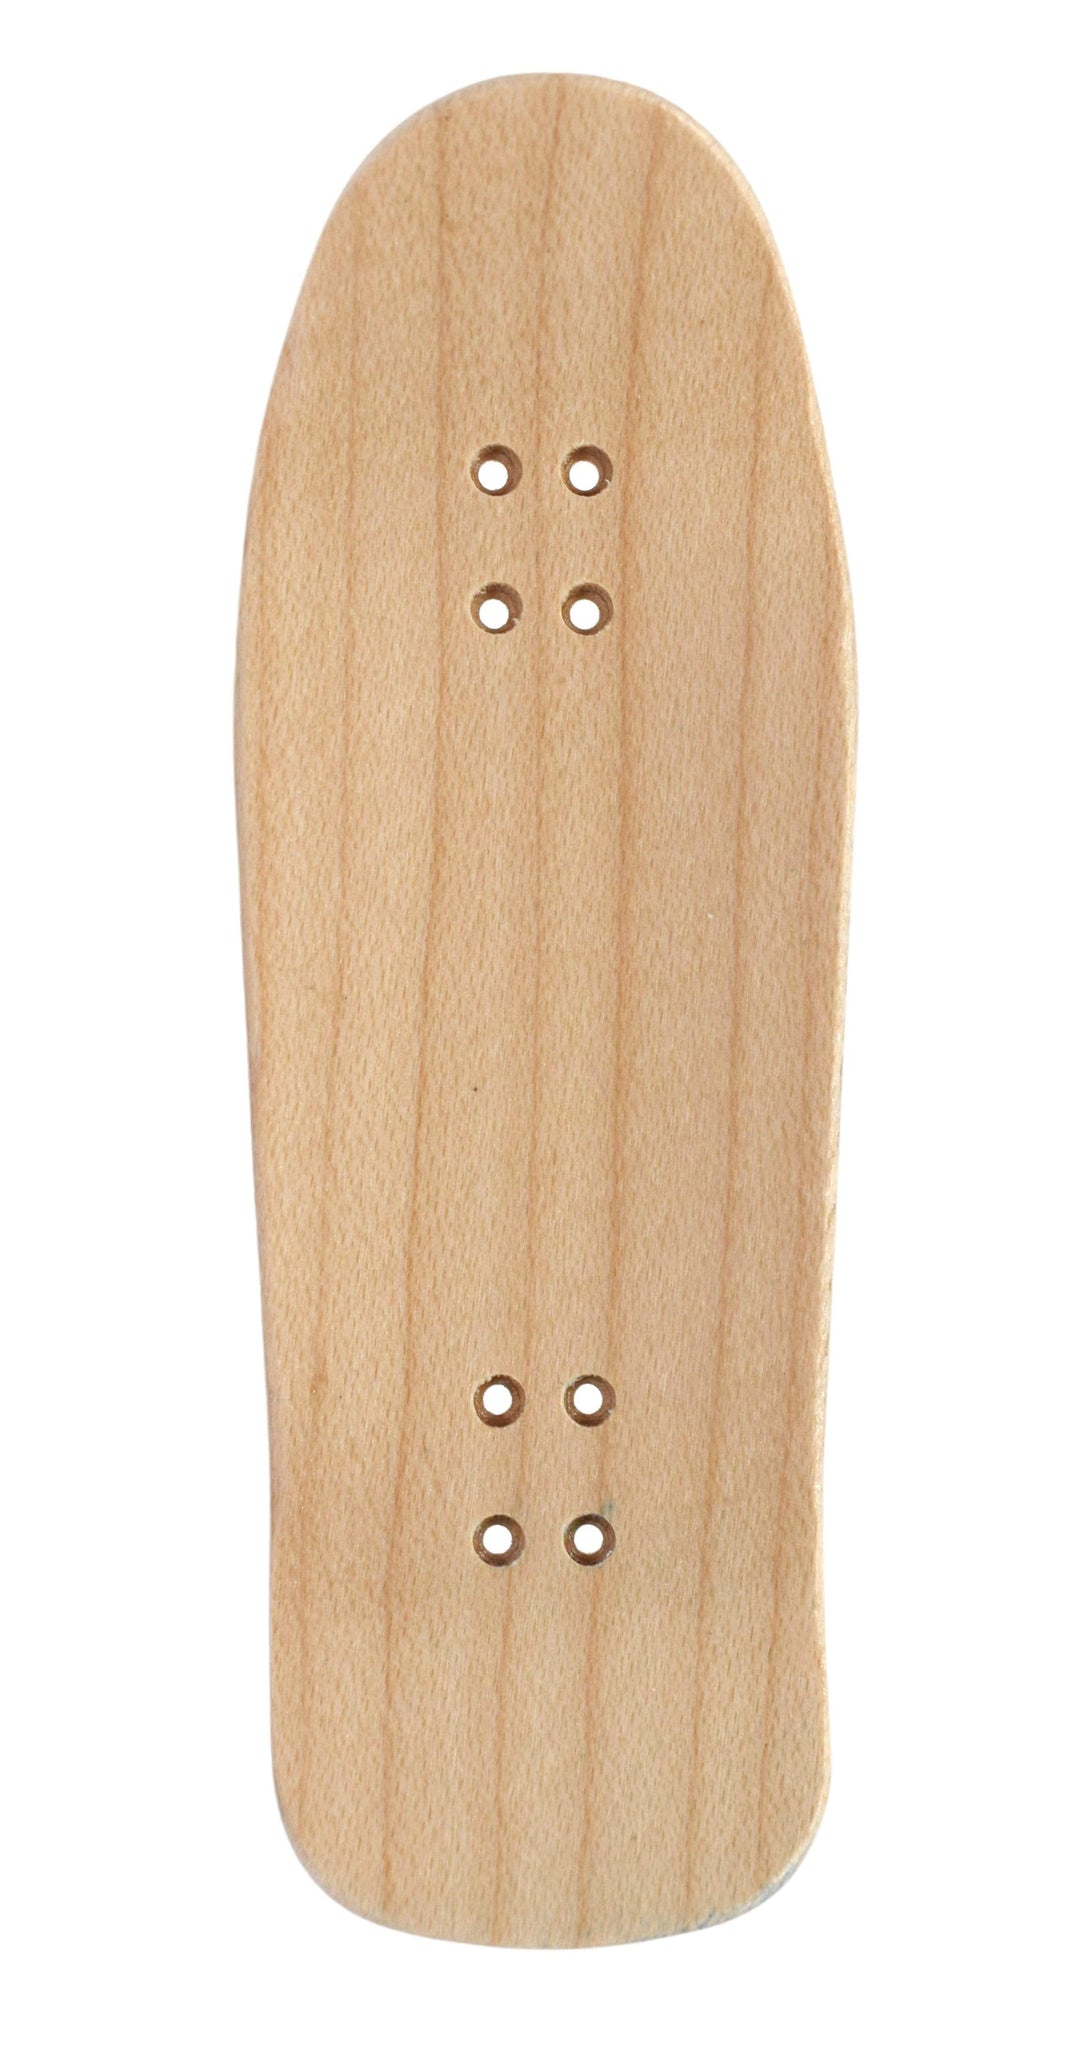 Teak Tuning Carlsbad Cruiser Wooden Fingerboard Deck, "The Classic" - 34mm x 100mm